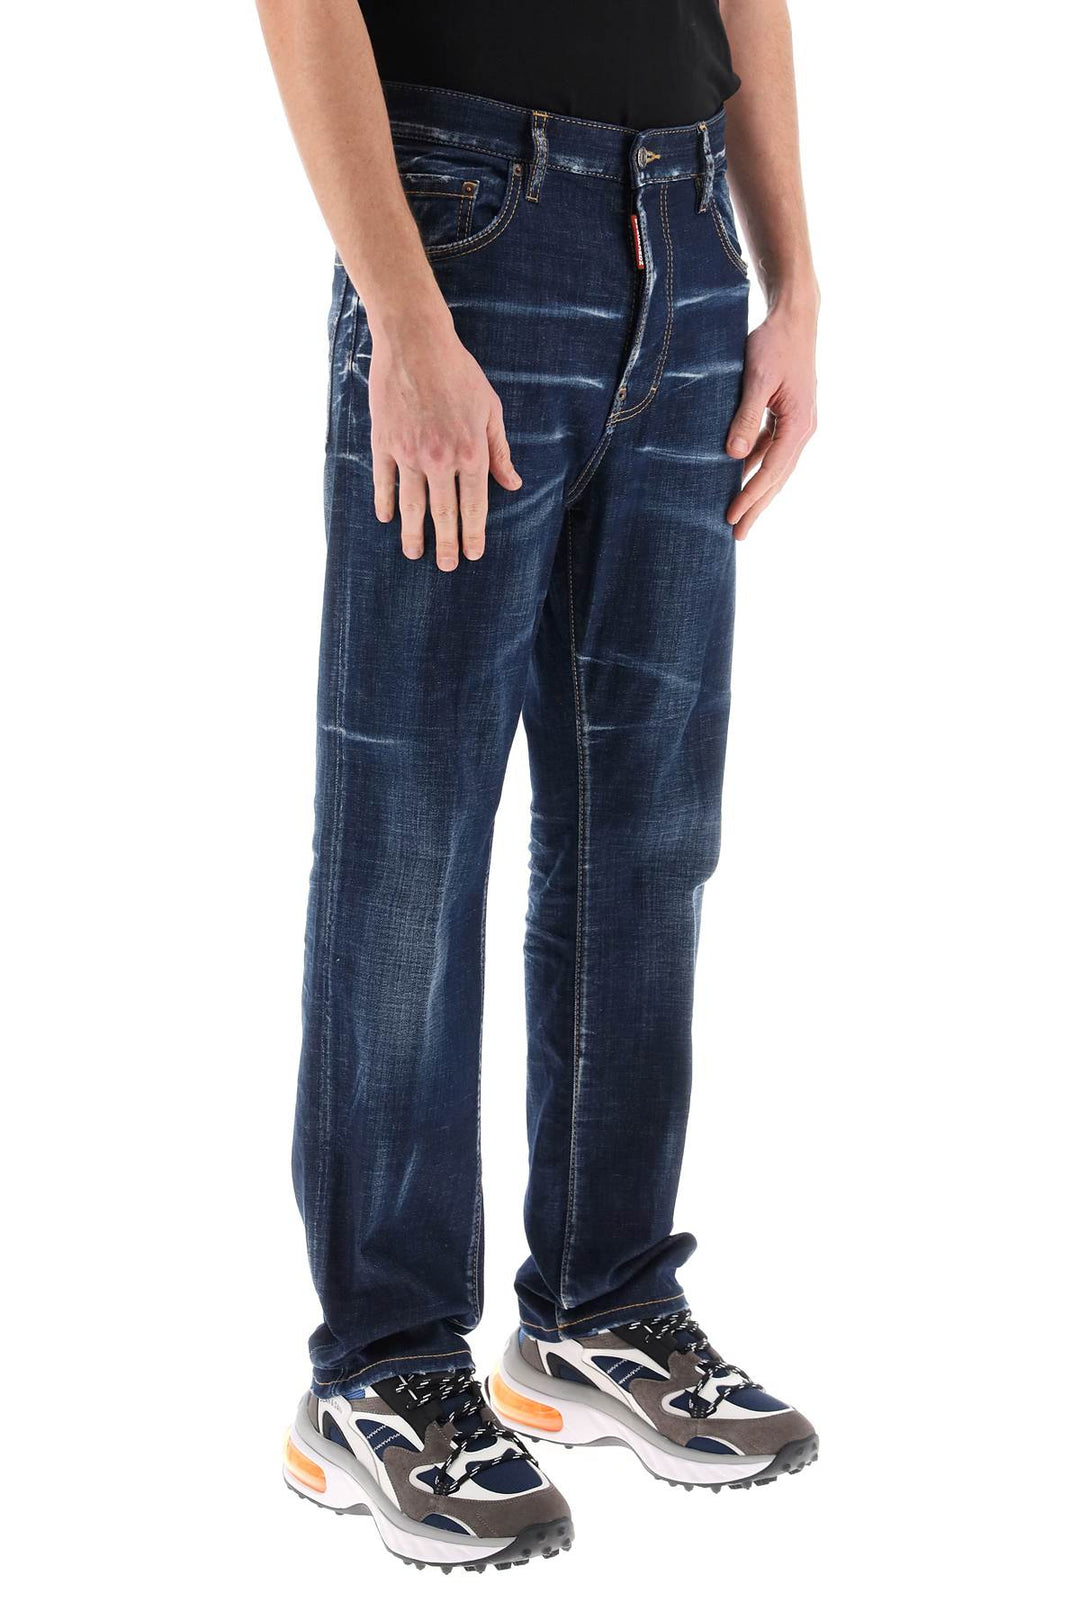 Dsquared2 642 Jeans In Dark Clean Wash   Blue